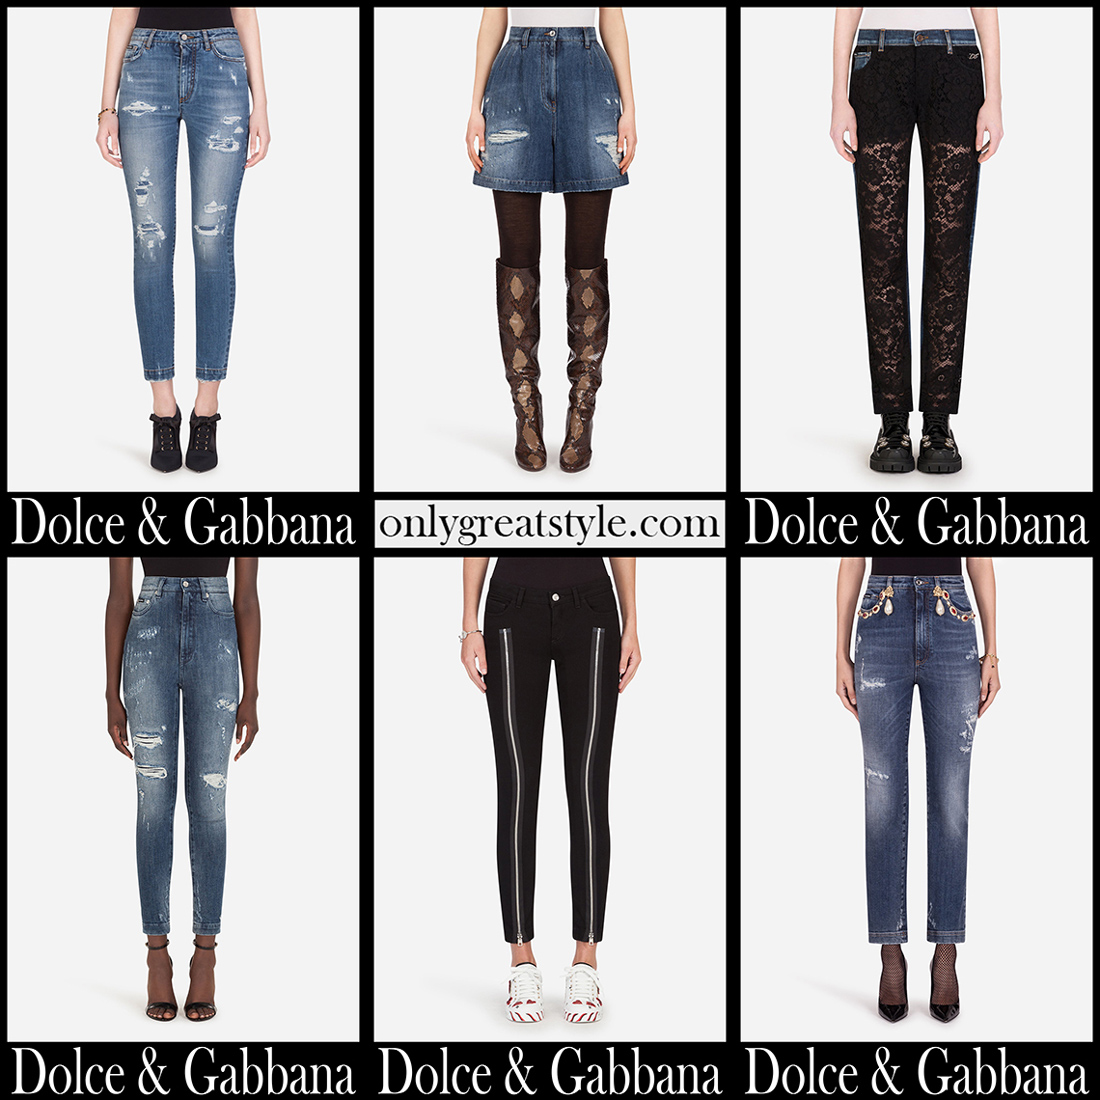 Dolce Gabbana jeans 2021 new arrivals womens fall winter